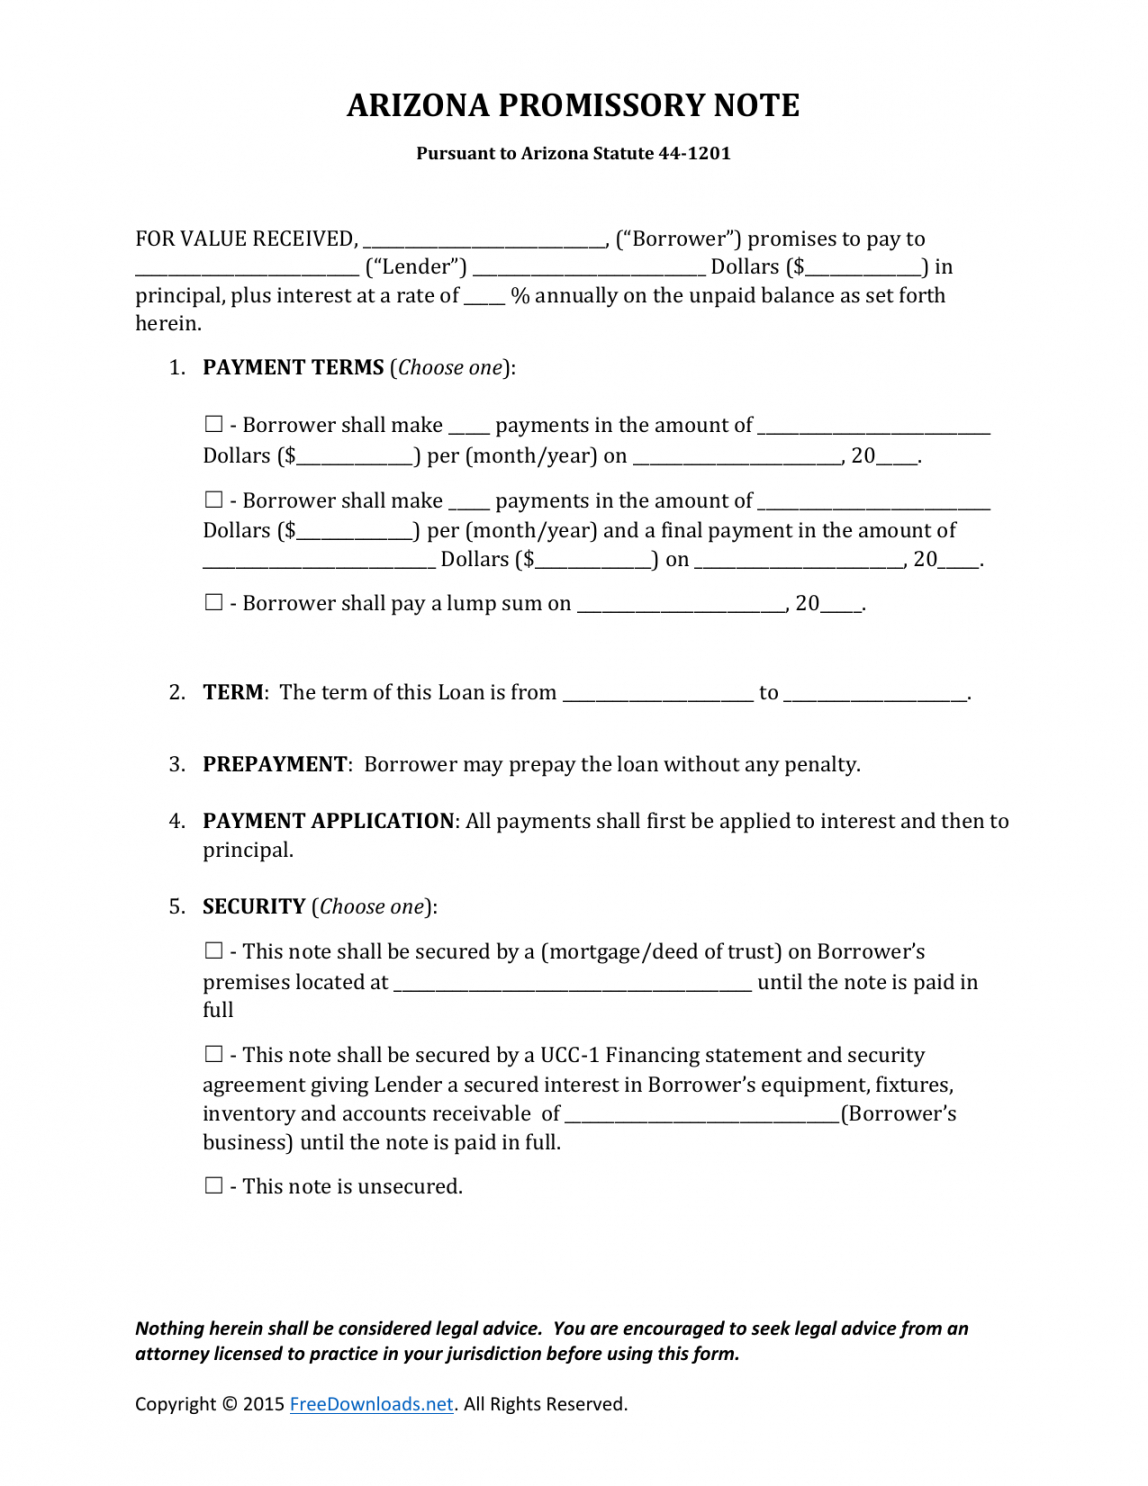 free download arizona promissory note form  pdf  rtf  word arizona promissory note template word